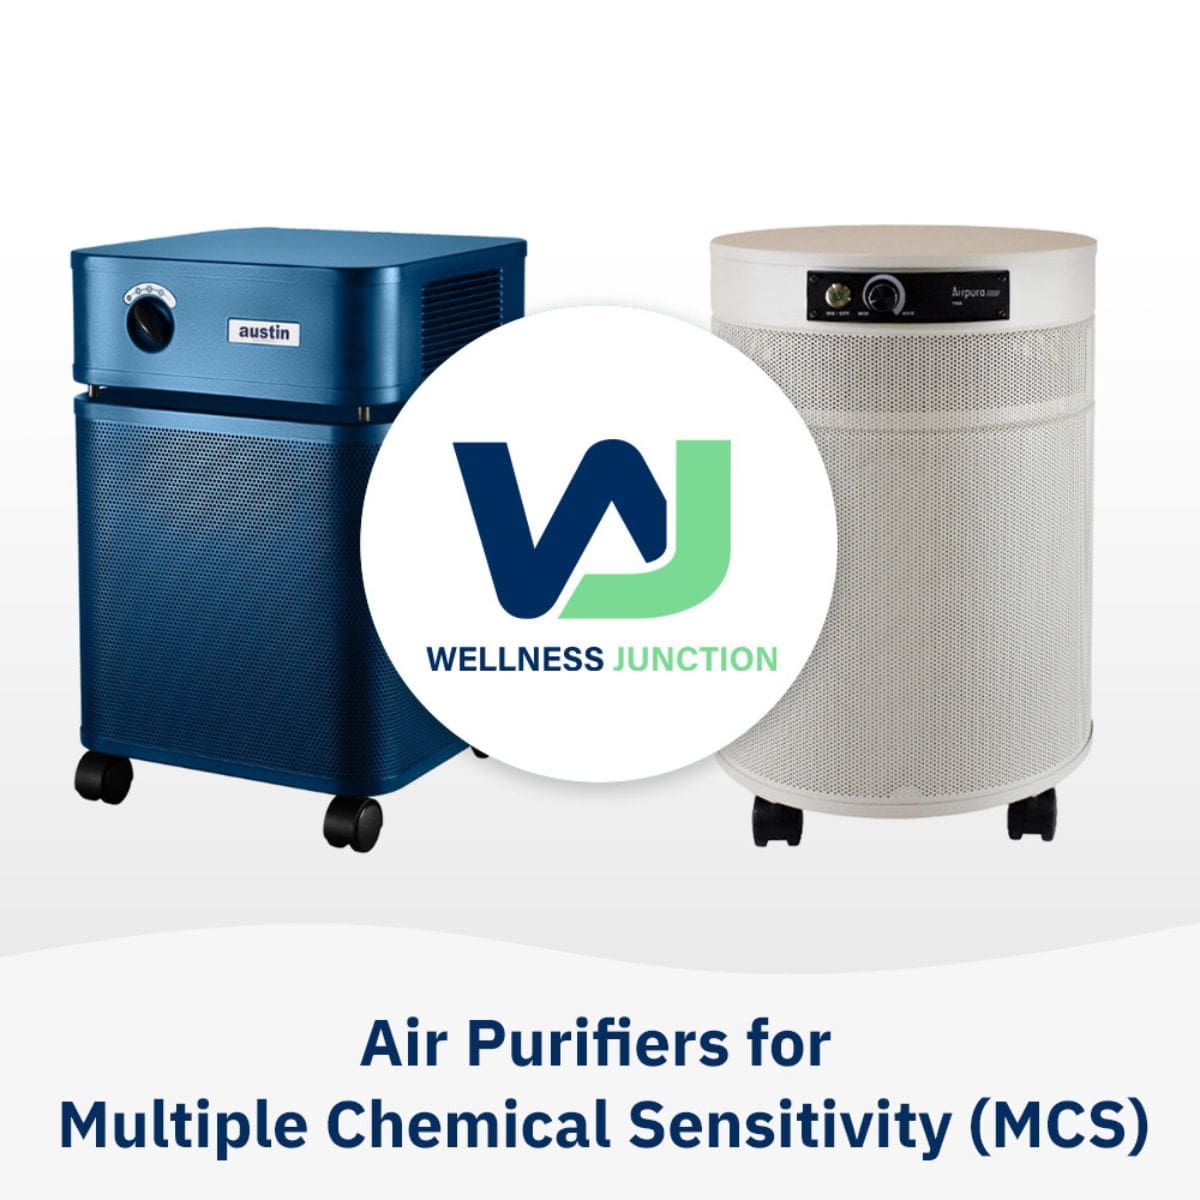 Air Purifiers for MCS — Multiple Chemical Sensitivity